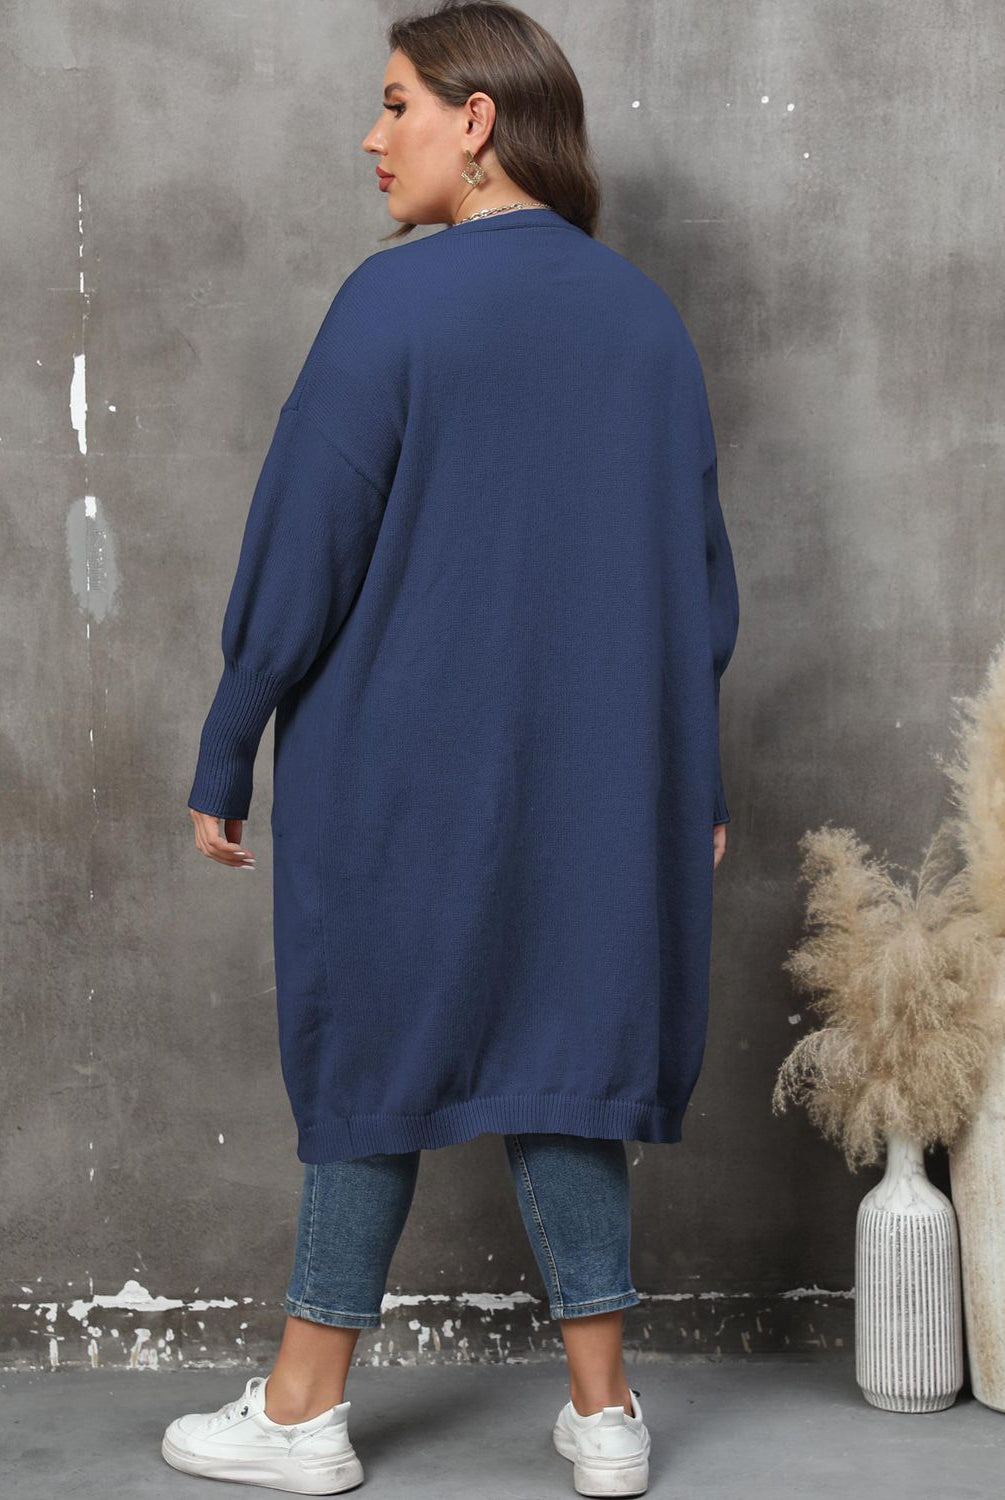 Dim Gray Plus Size Long Sleeve Pocketed Cardigan Clothing